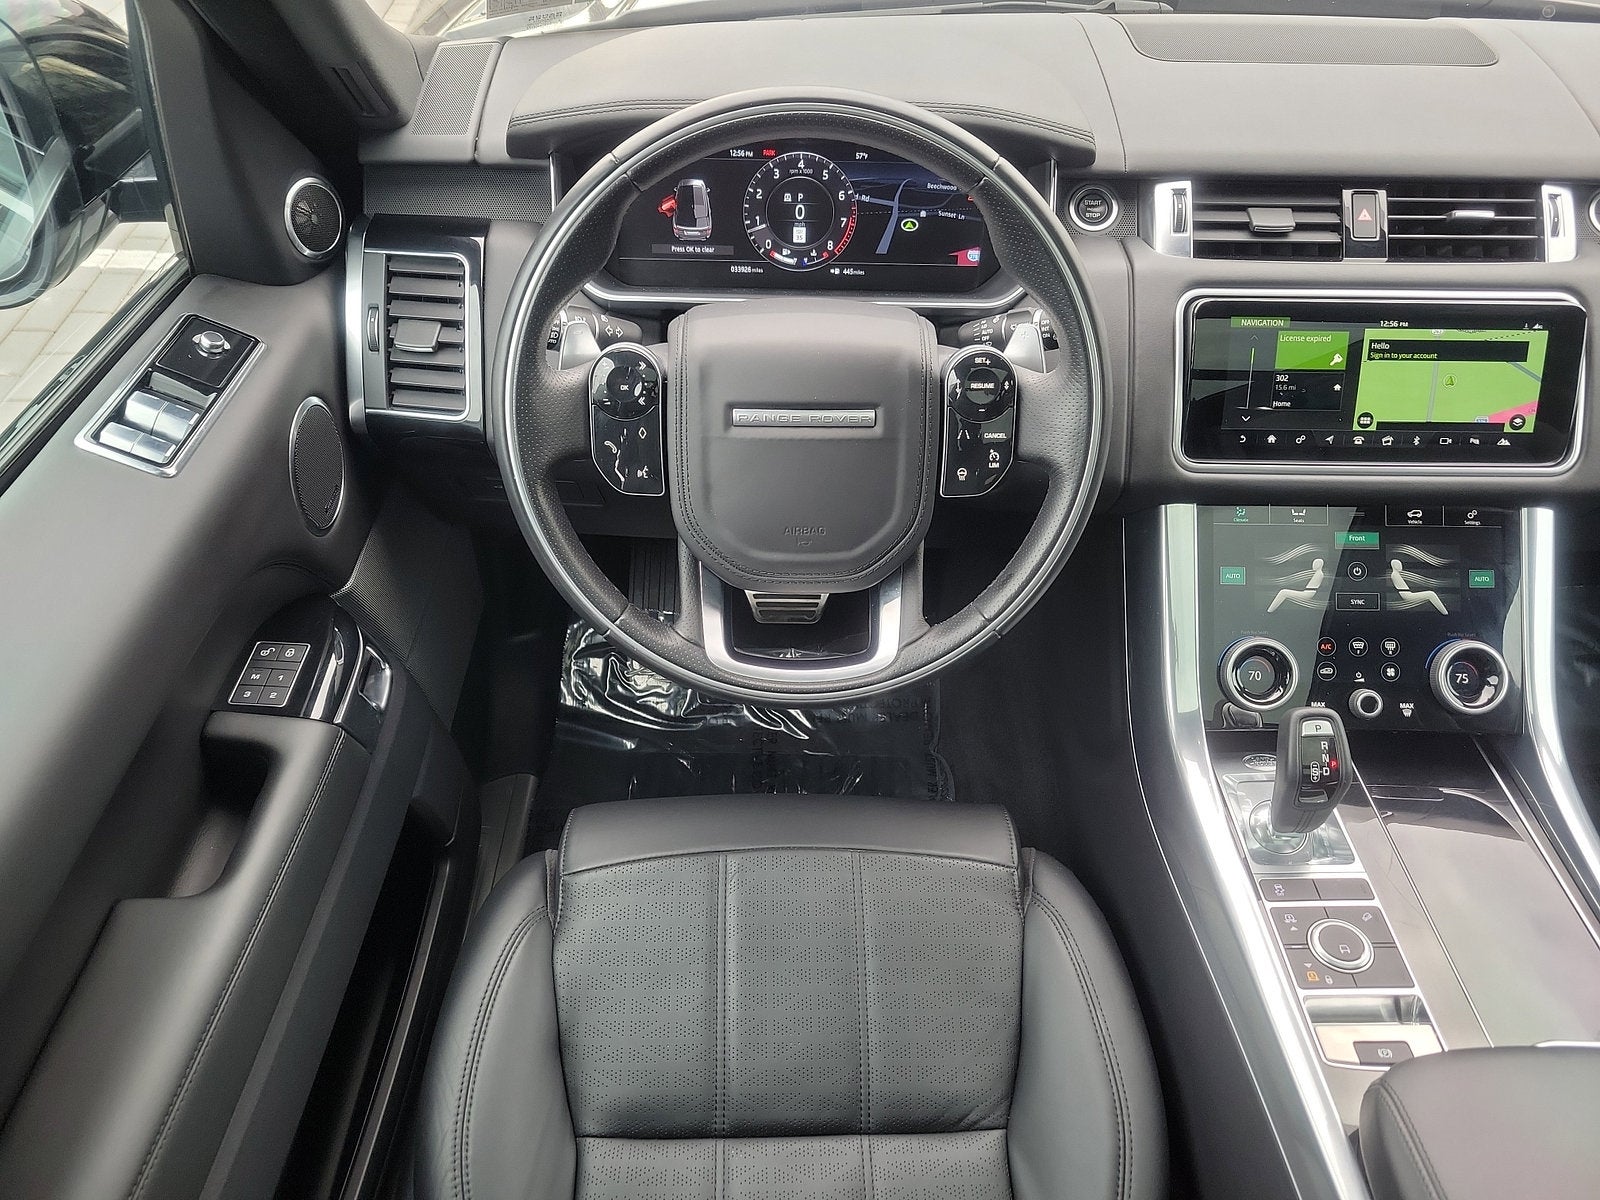 2019 Land Rover Range Rover Sport HSE Dynamic